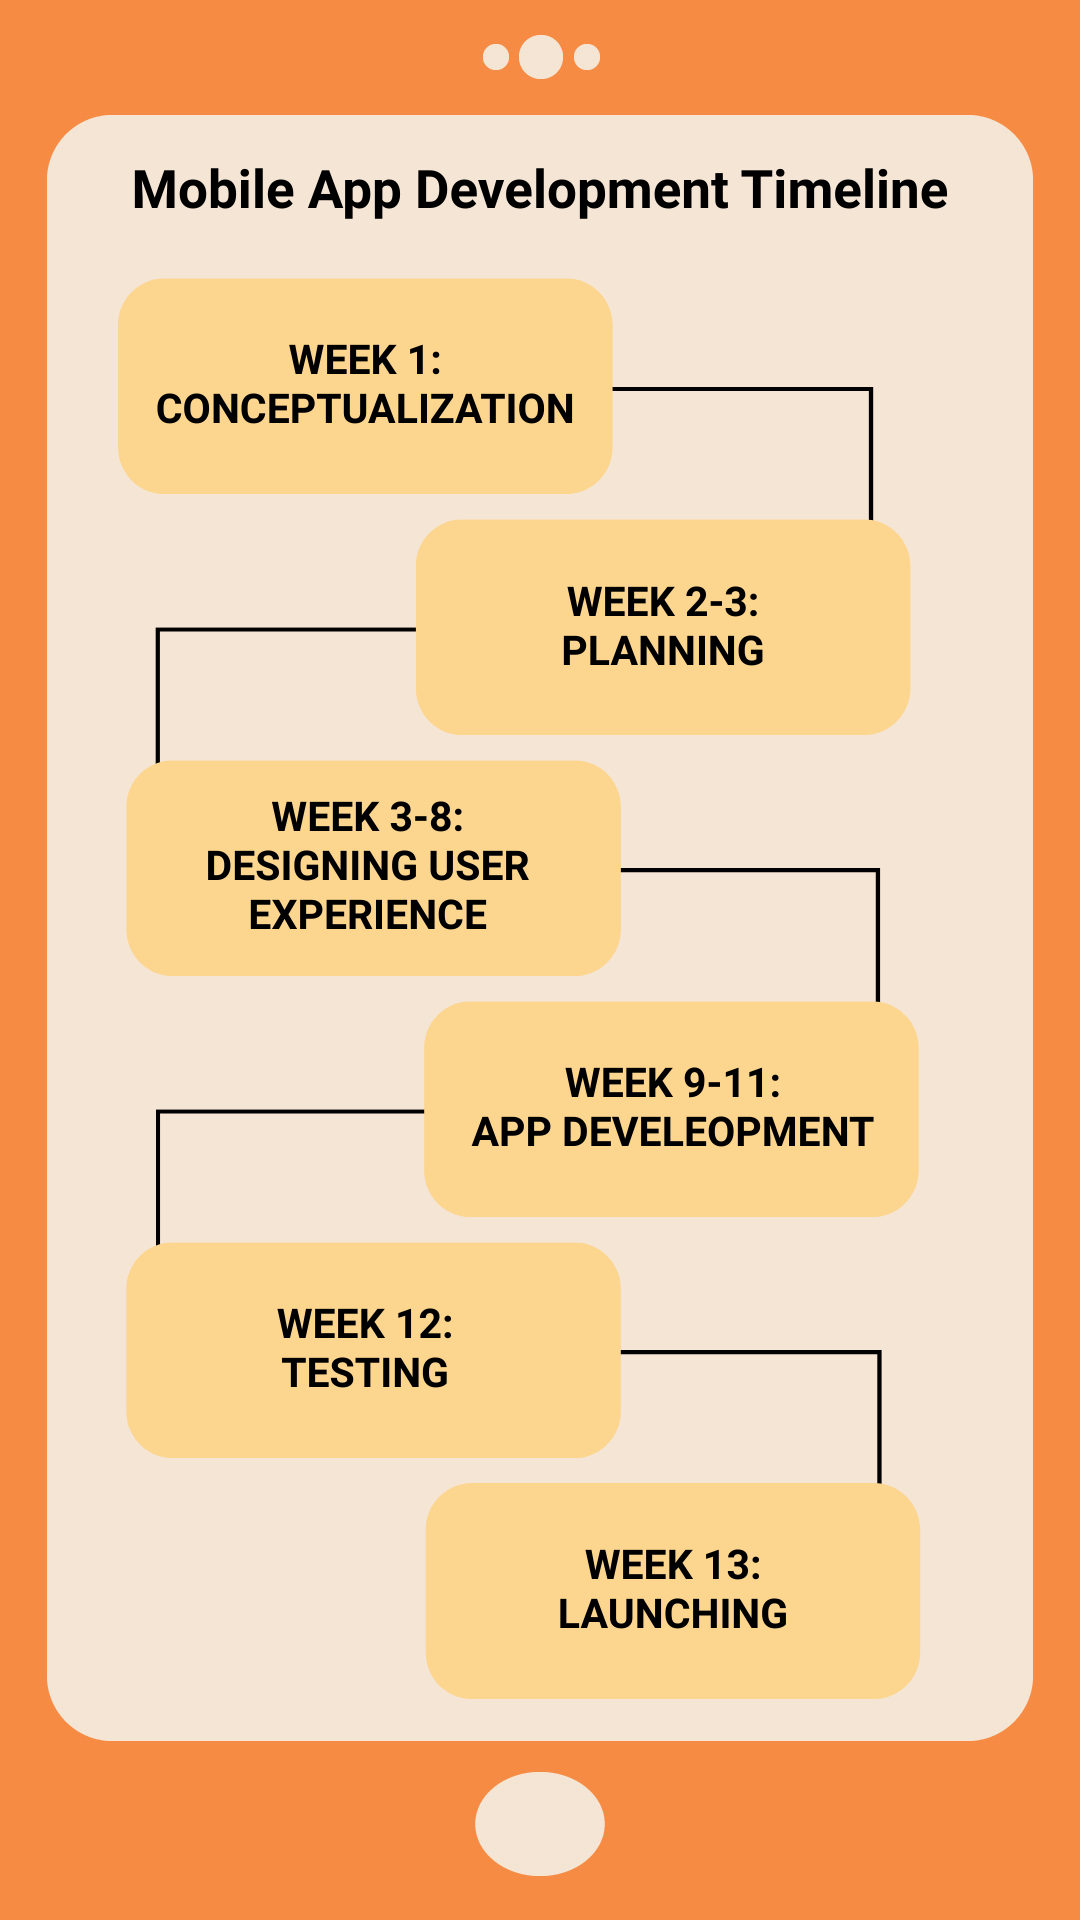 Mobile App Development Timeline